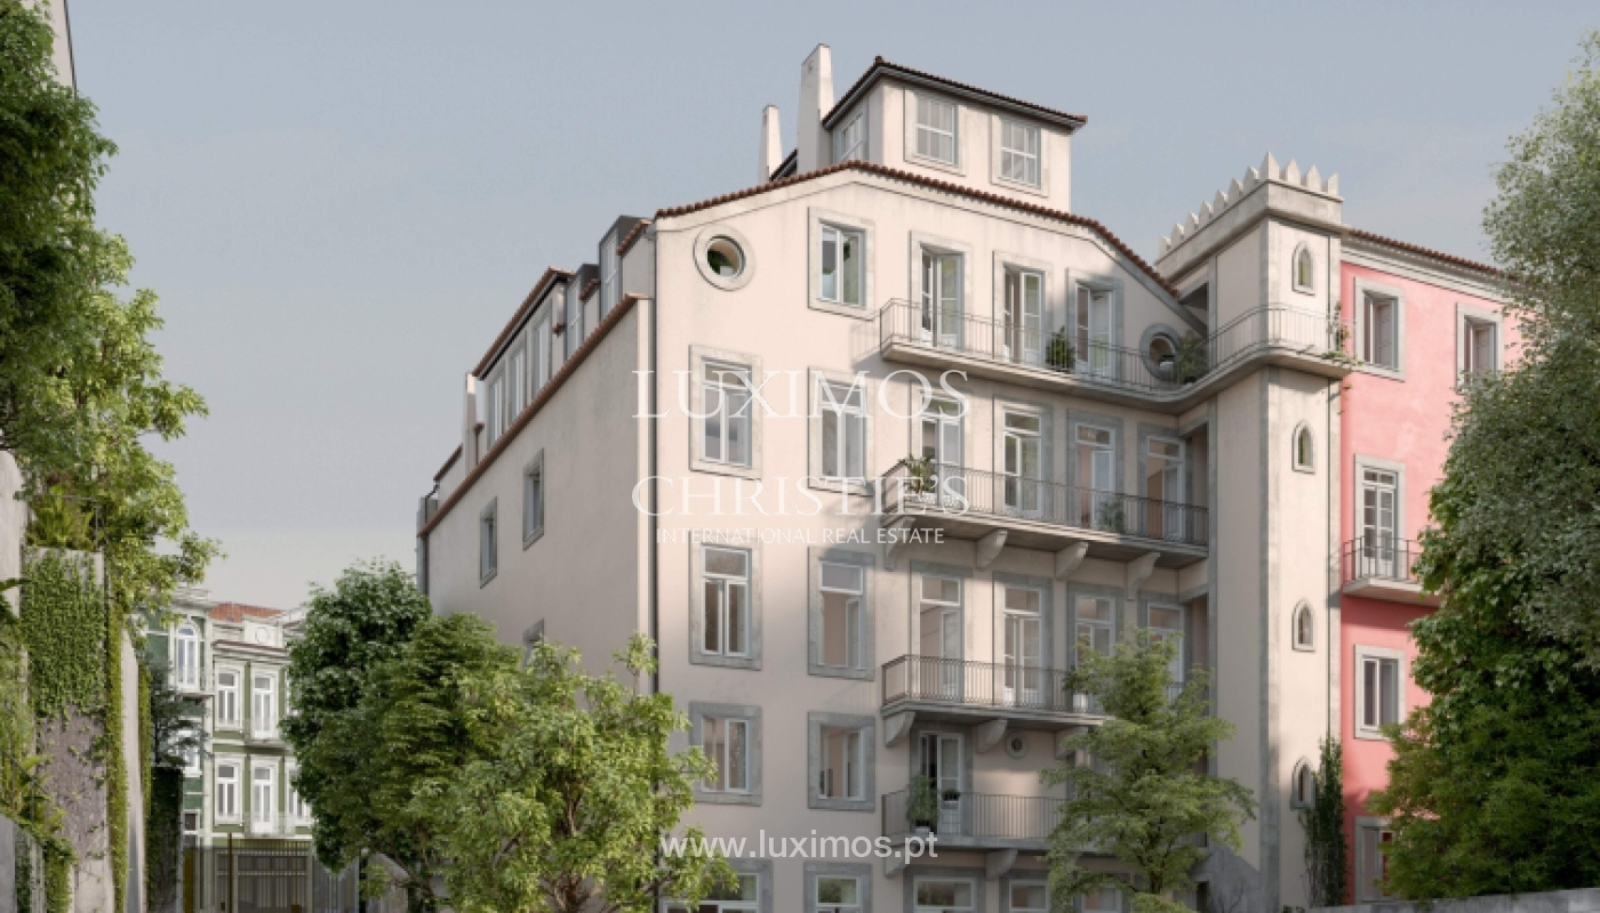 New apartment for sale in luxury development, Cedofeita,Porto,Portugal_161695